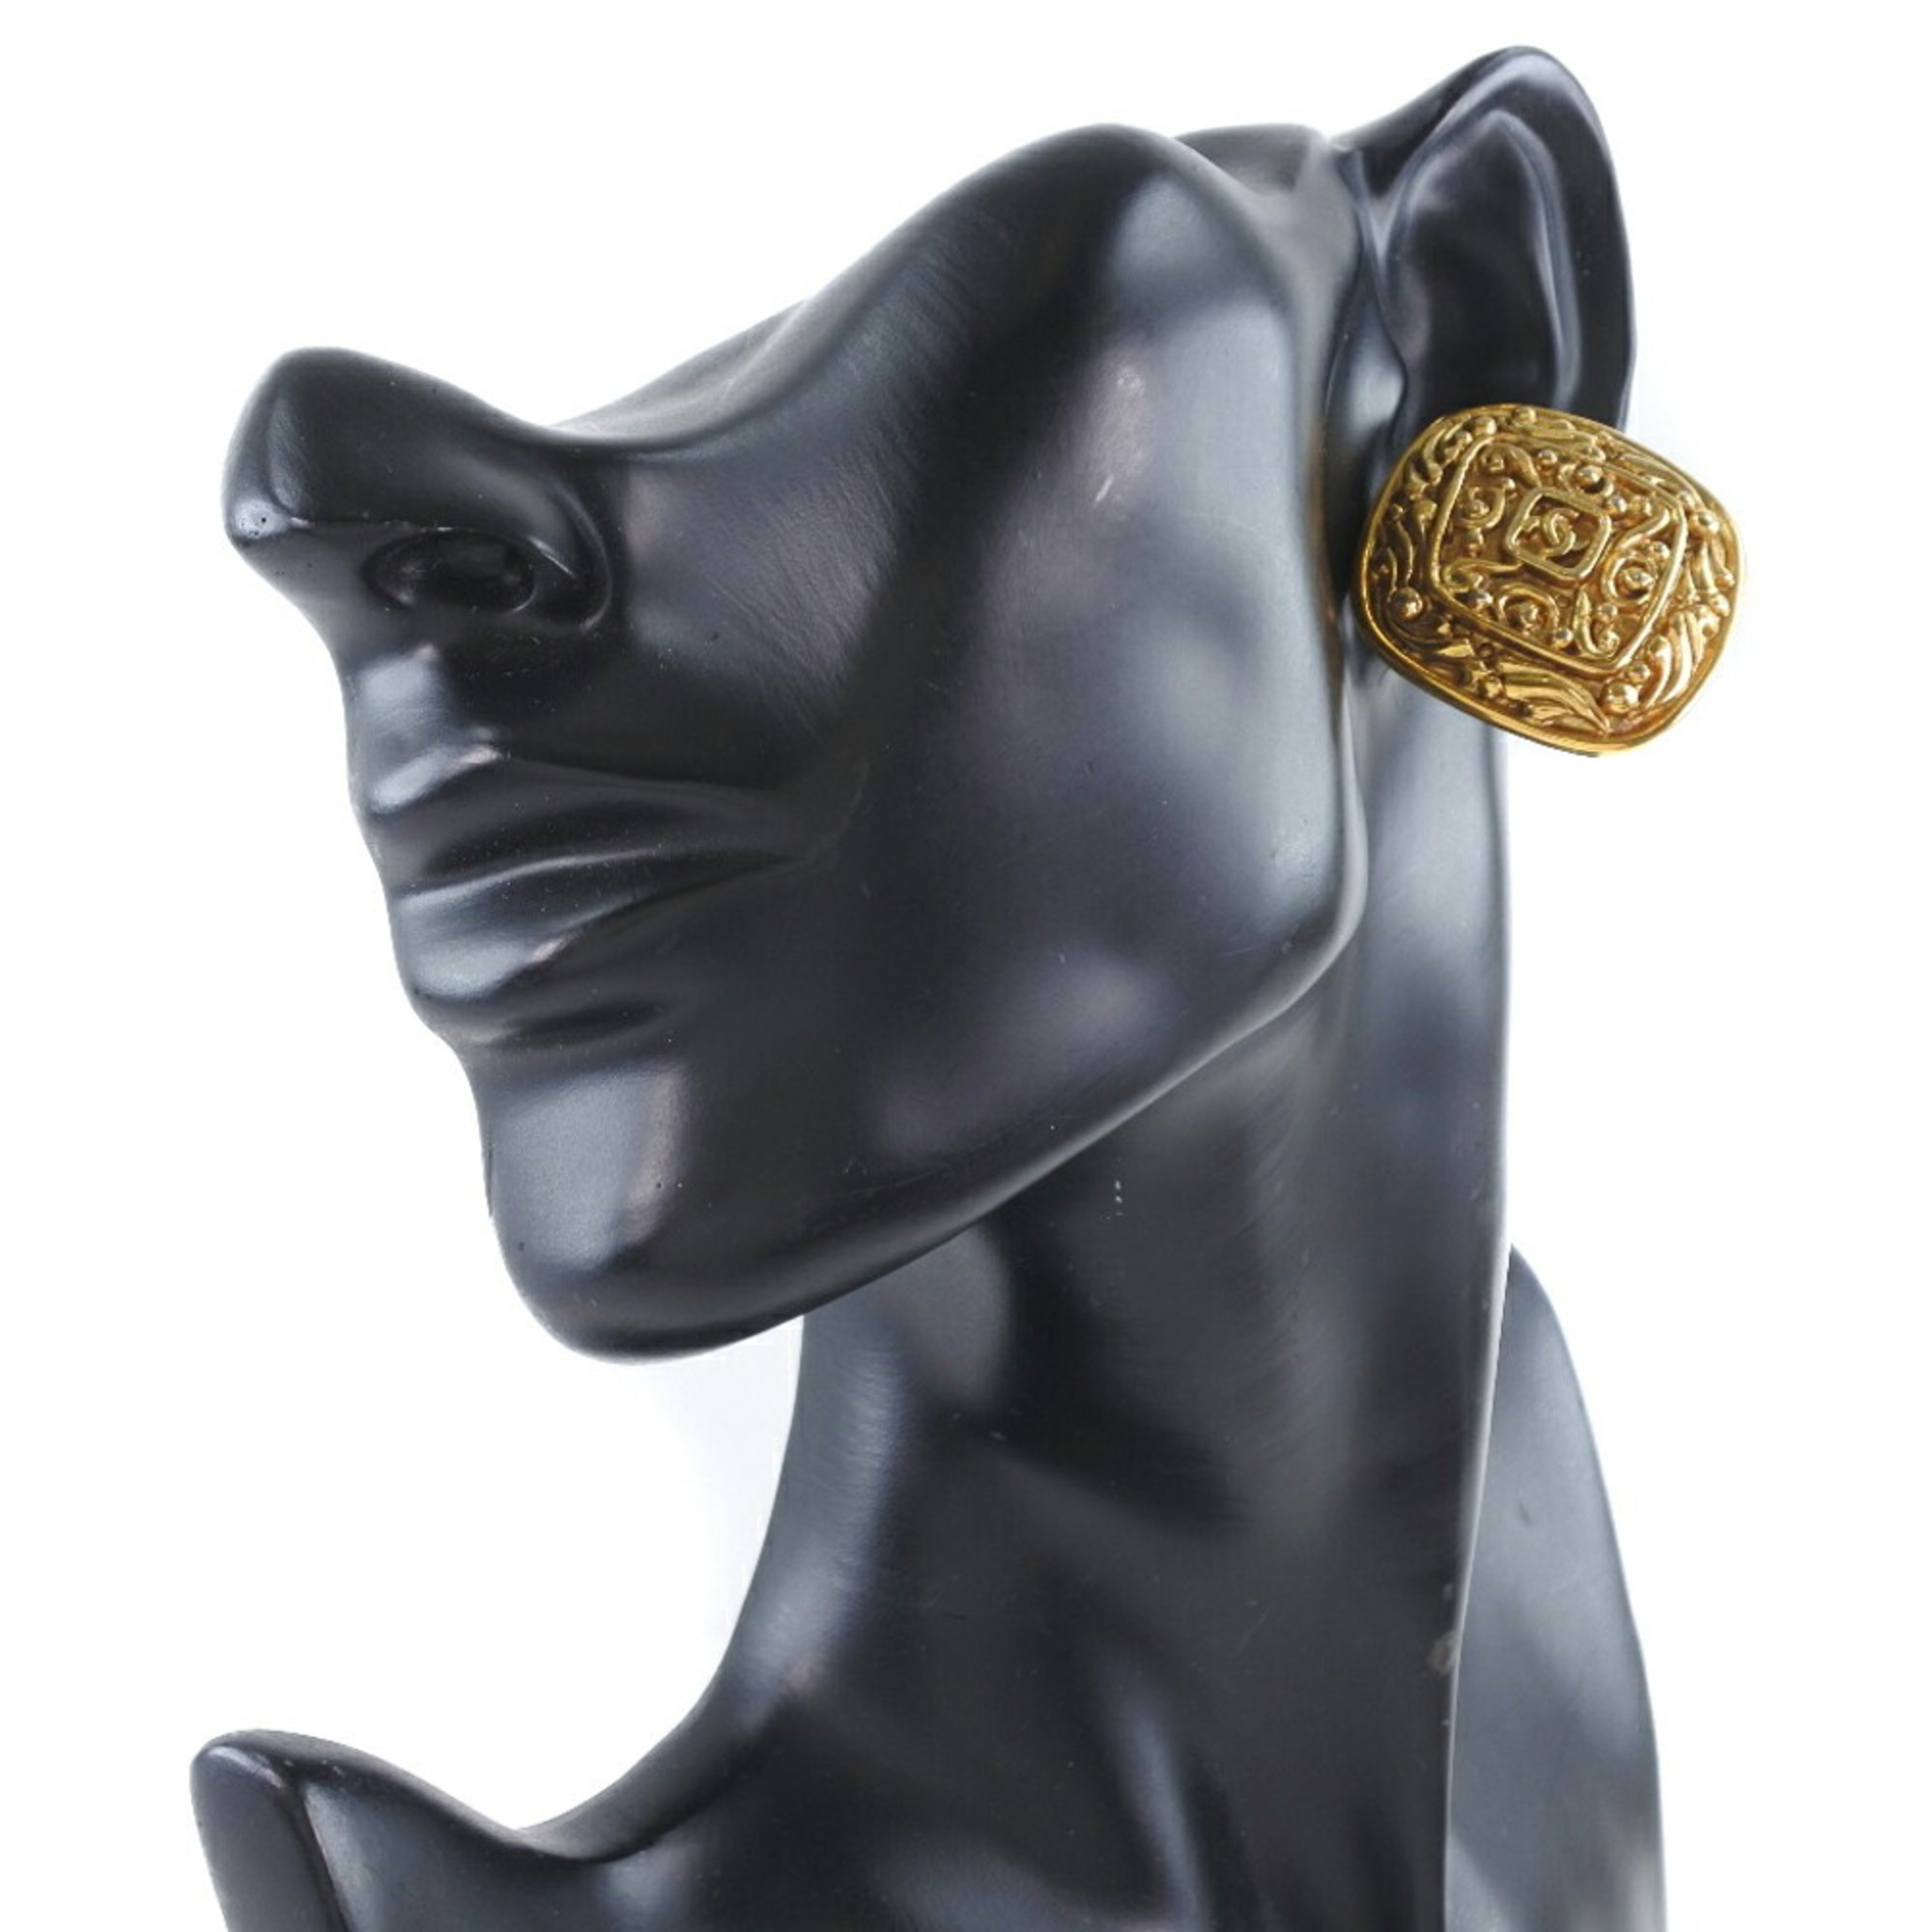 CHANEL Chanel here mark rhombus vintage gold-plated ladies earrings